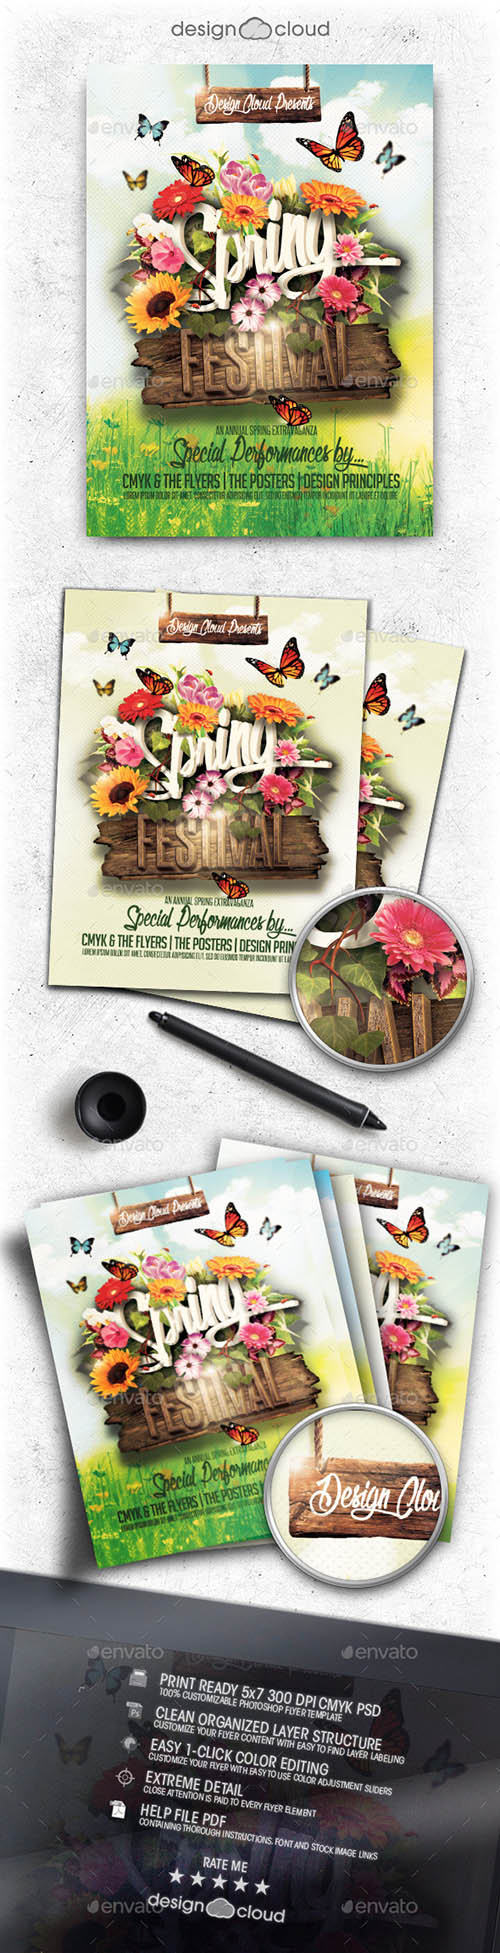 GraphicRiver - Spring Festival Flyer Template 10414877